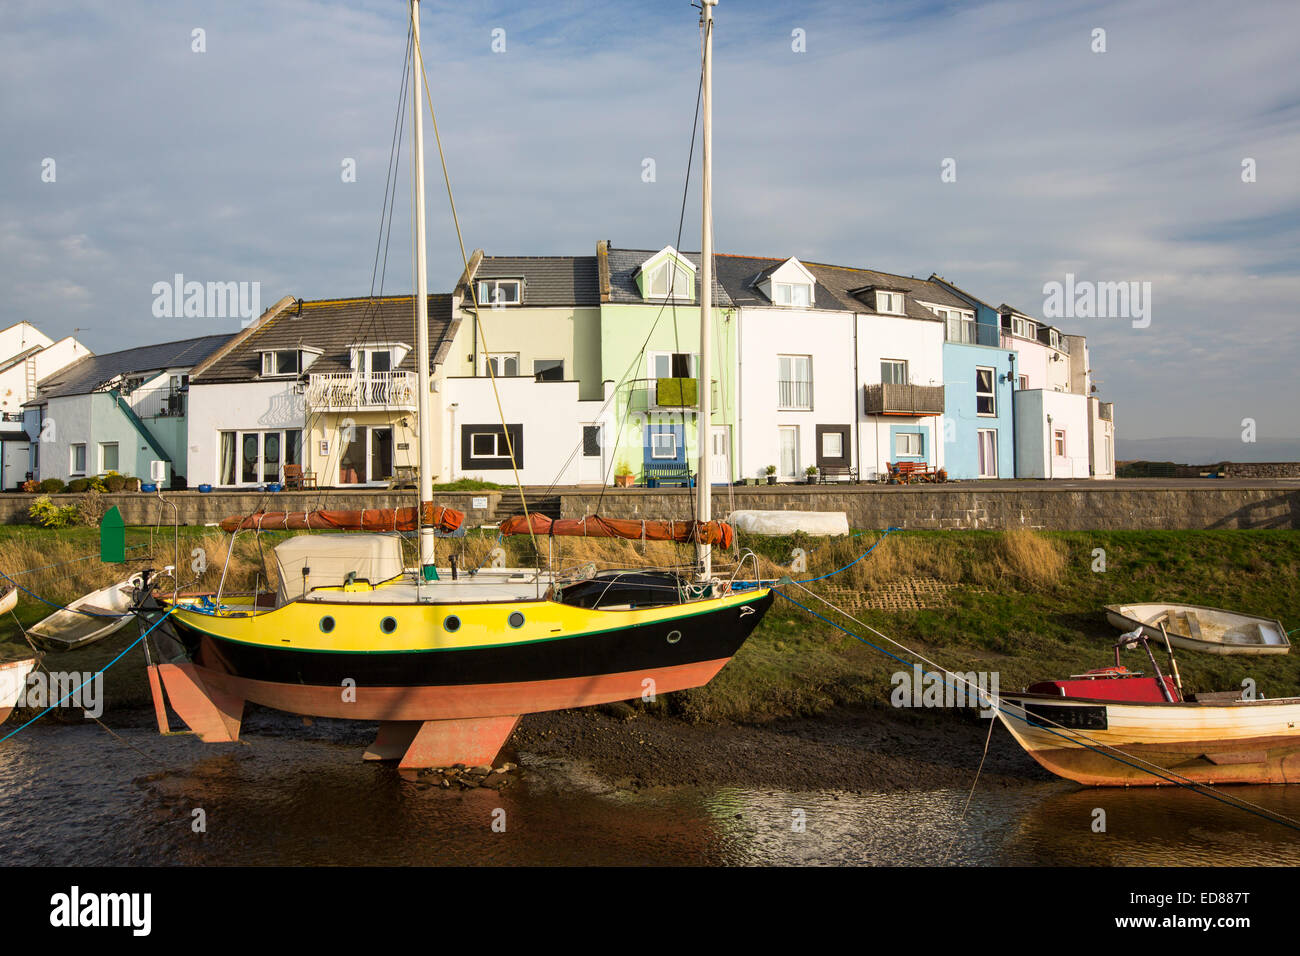 Harbour front housing at Haverigg, Cumbria, UK. Stock Photo